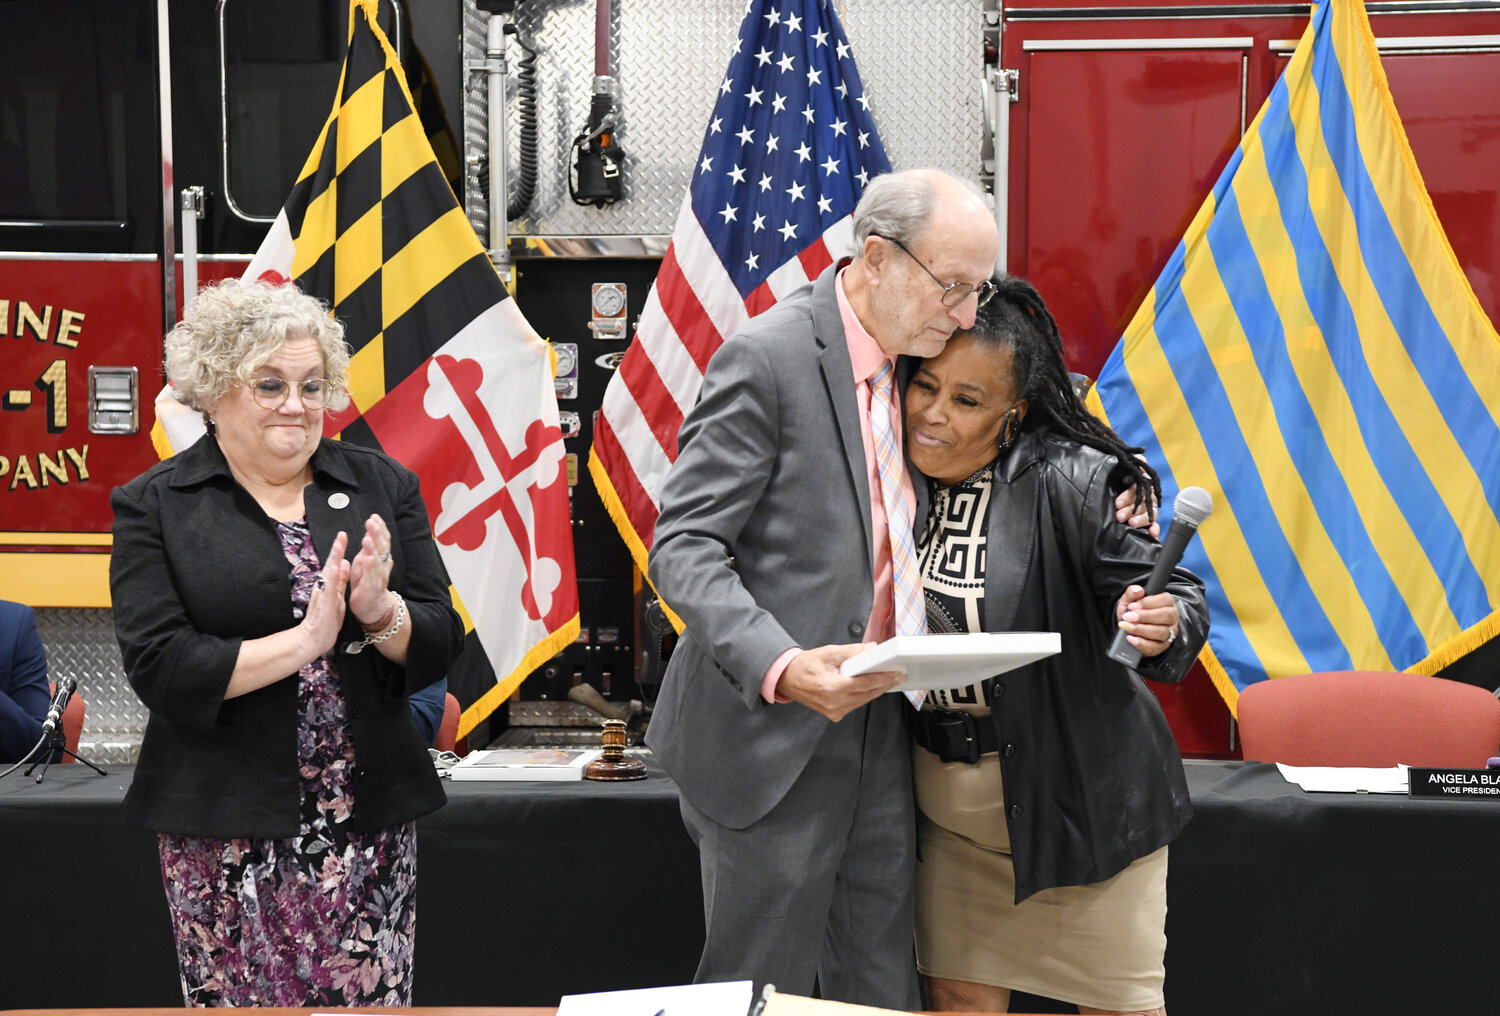 Council members Angela Blake and April Jackson present a celebration plaque to outgoing Mayor Jack Heath.